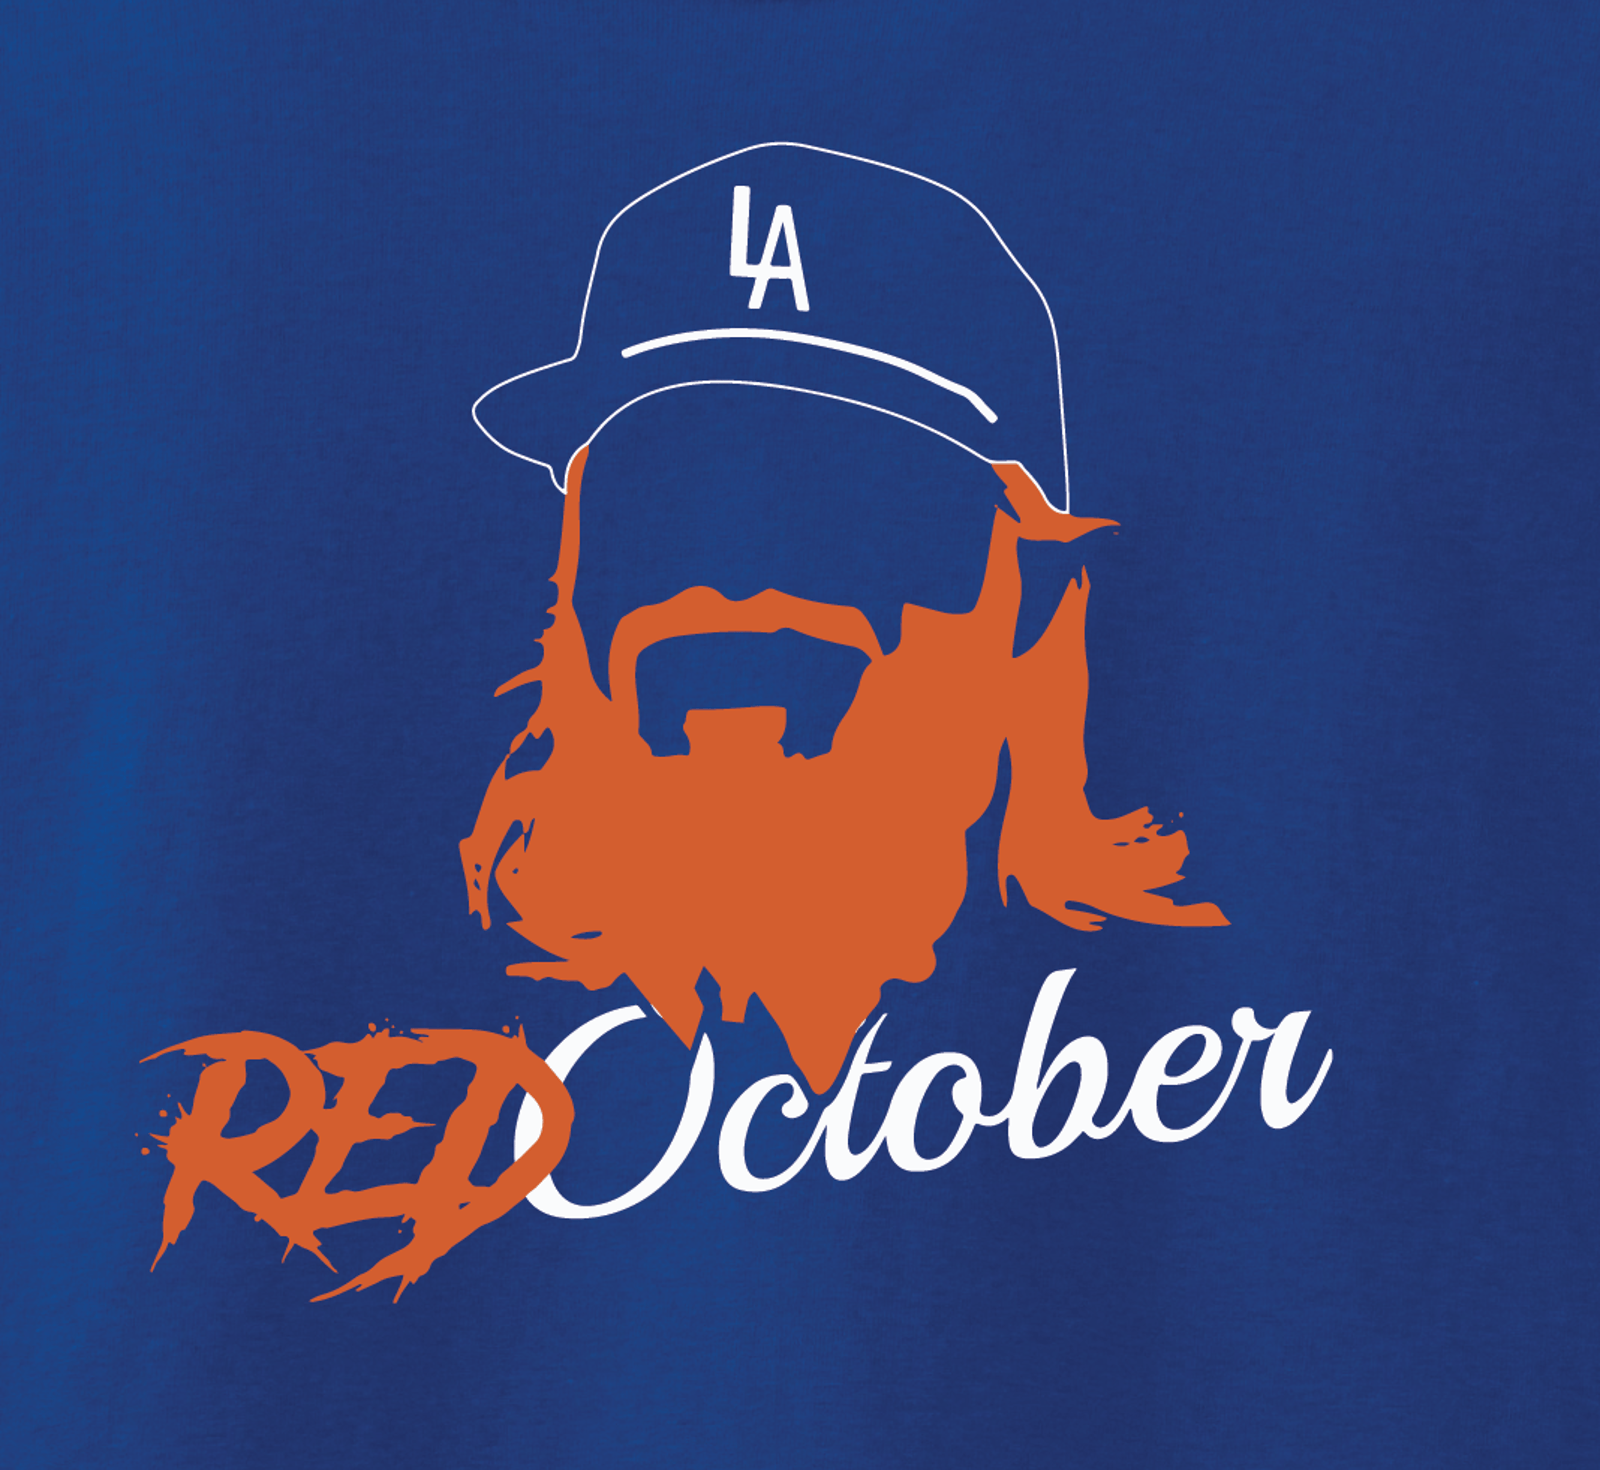 Red October Logo - Red October – Justin Turner Shirt |